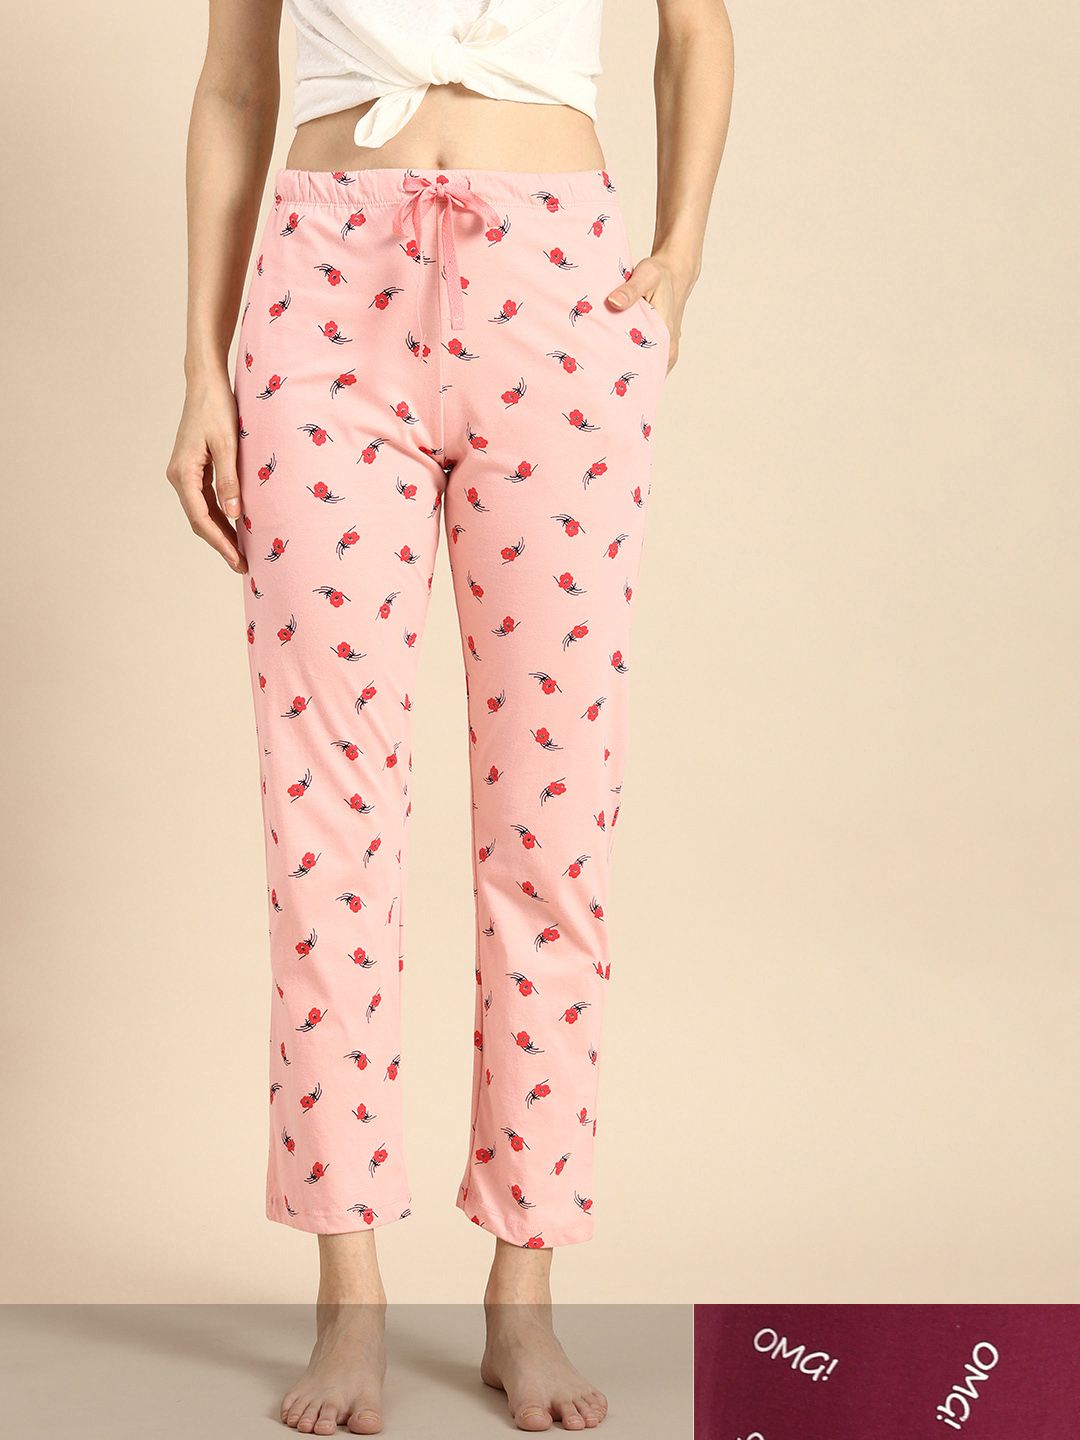 Dreamz by Pantaloons Pack of 2 Maroon & Pink Printed Lounge Pants Price in India